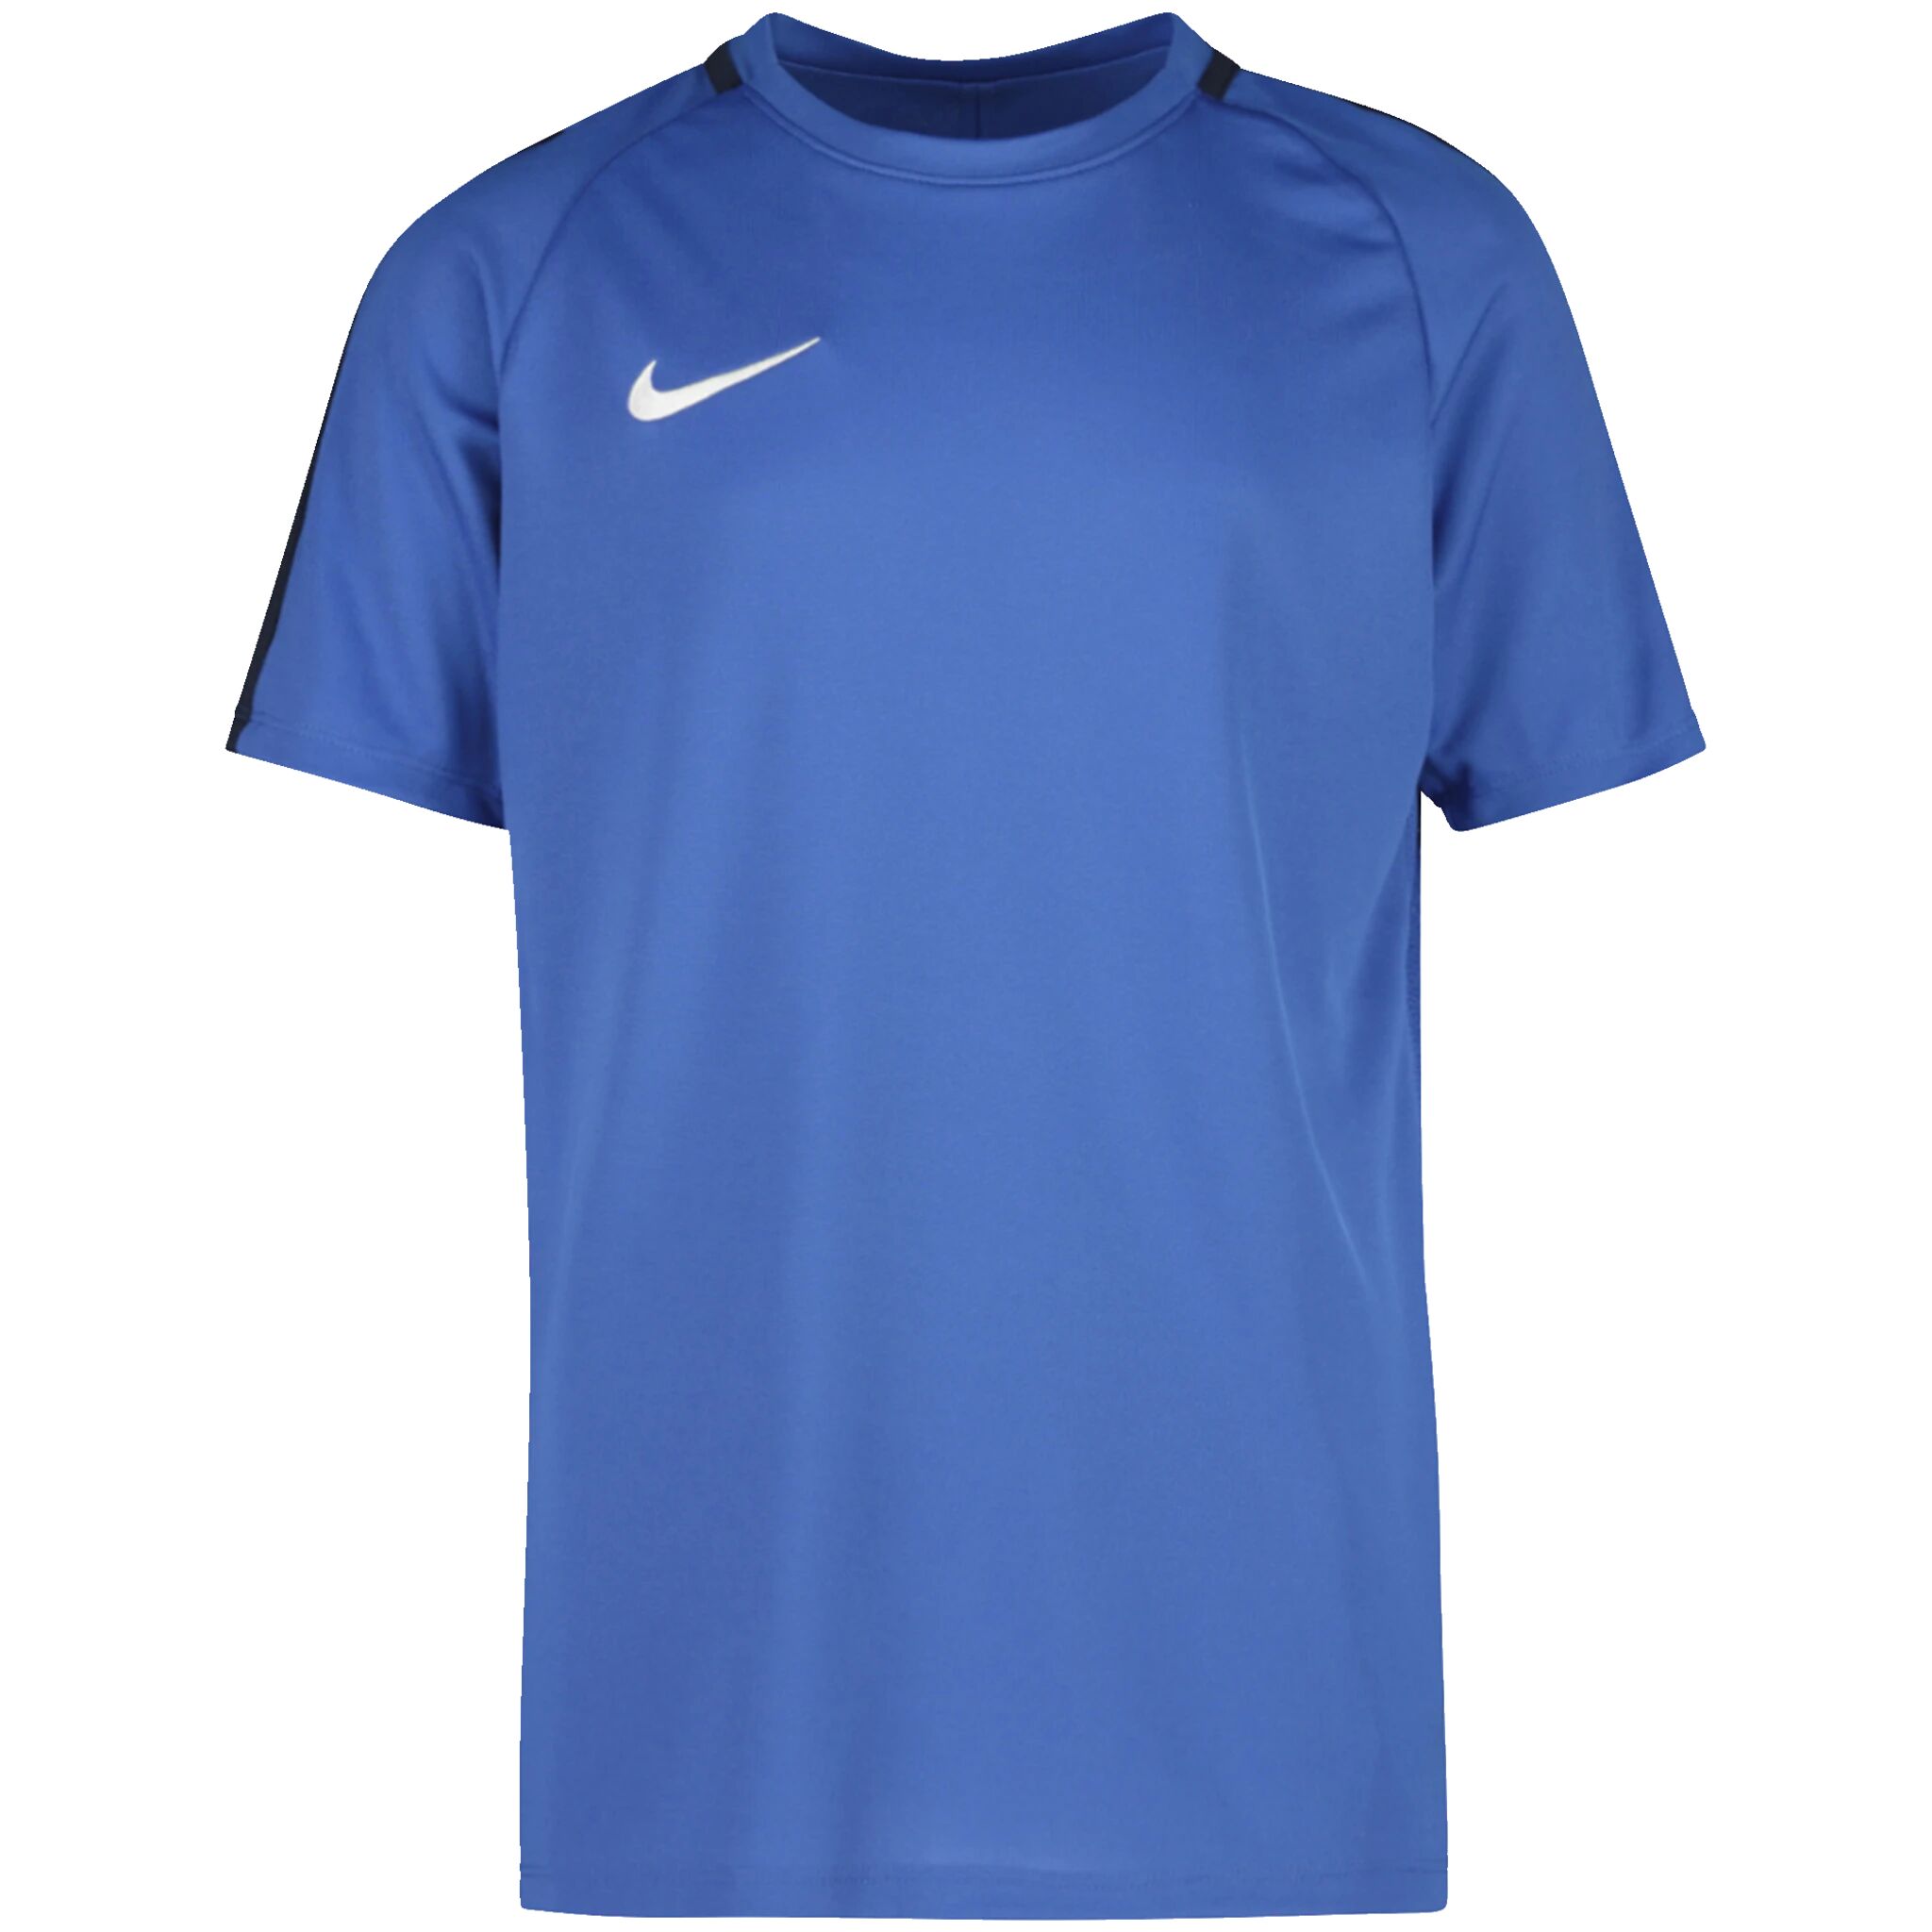 Nike Dry Academy Top, treningstrøye junior M ROYAL BLUE/OBSIDIAN/